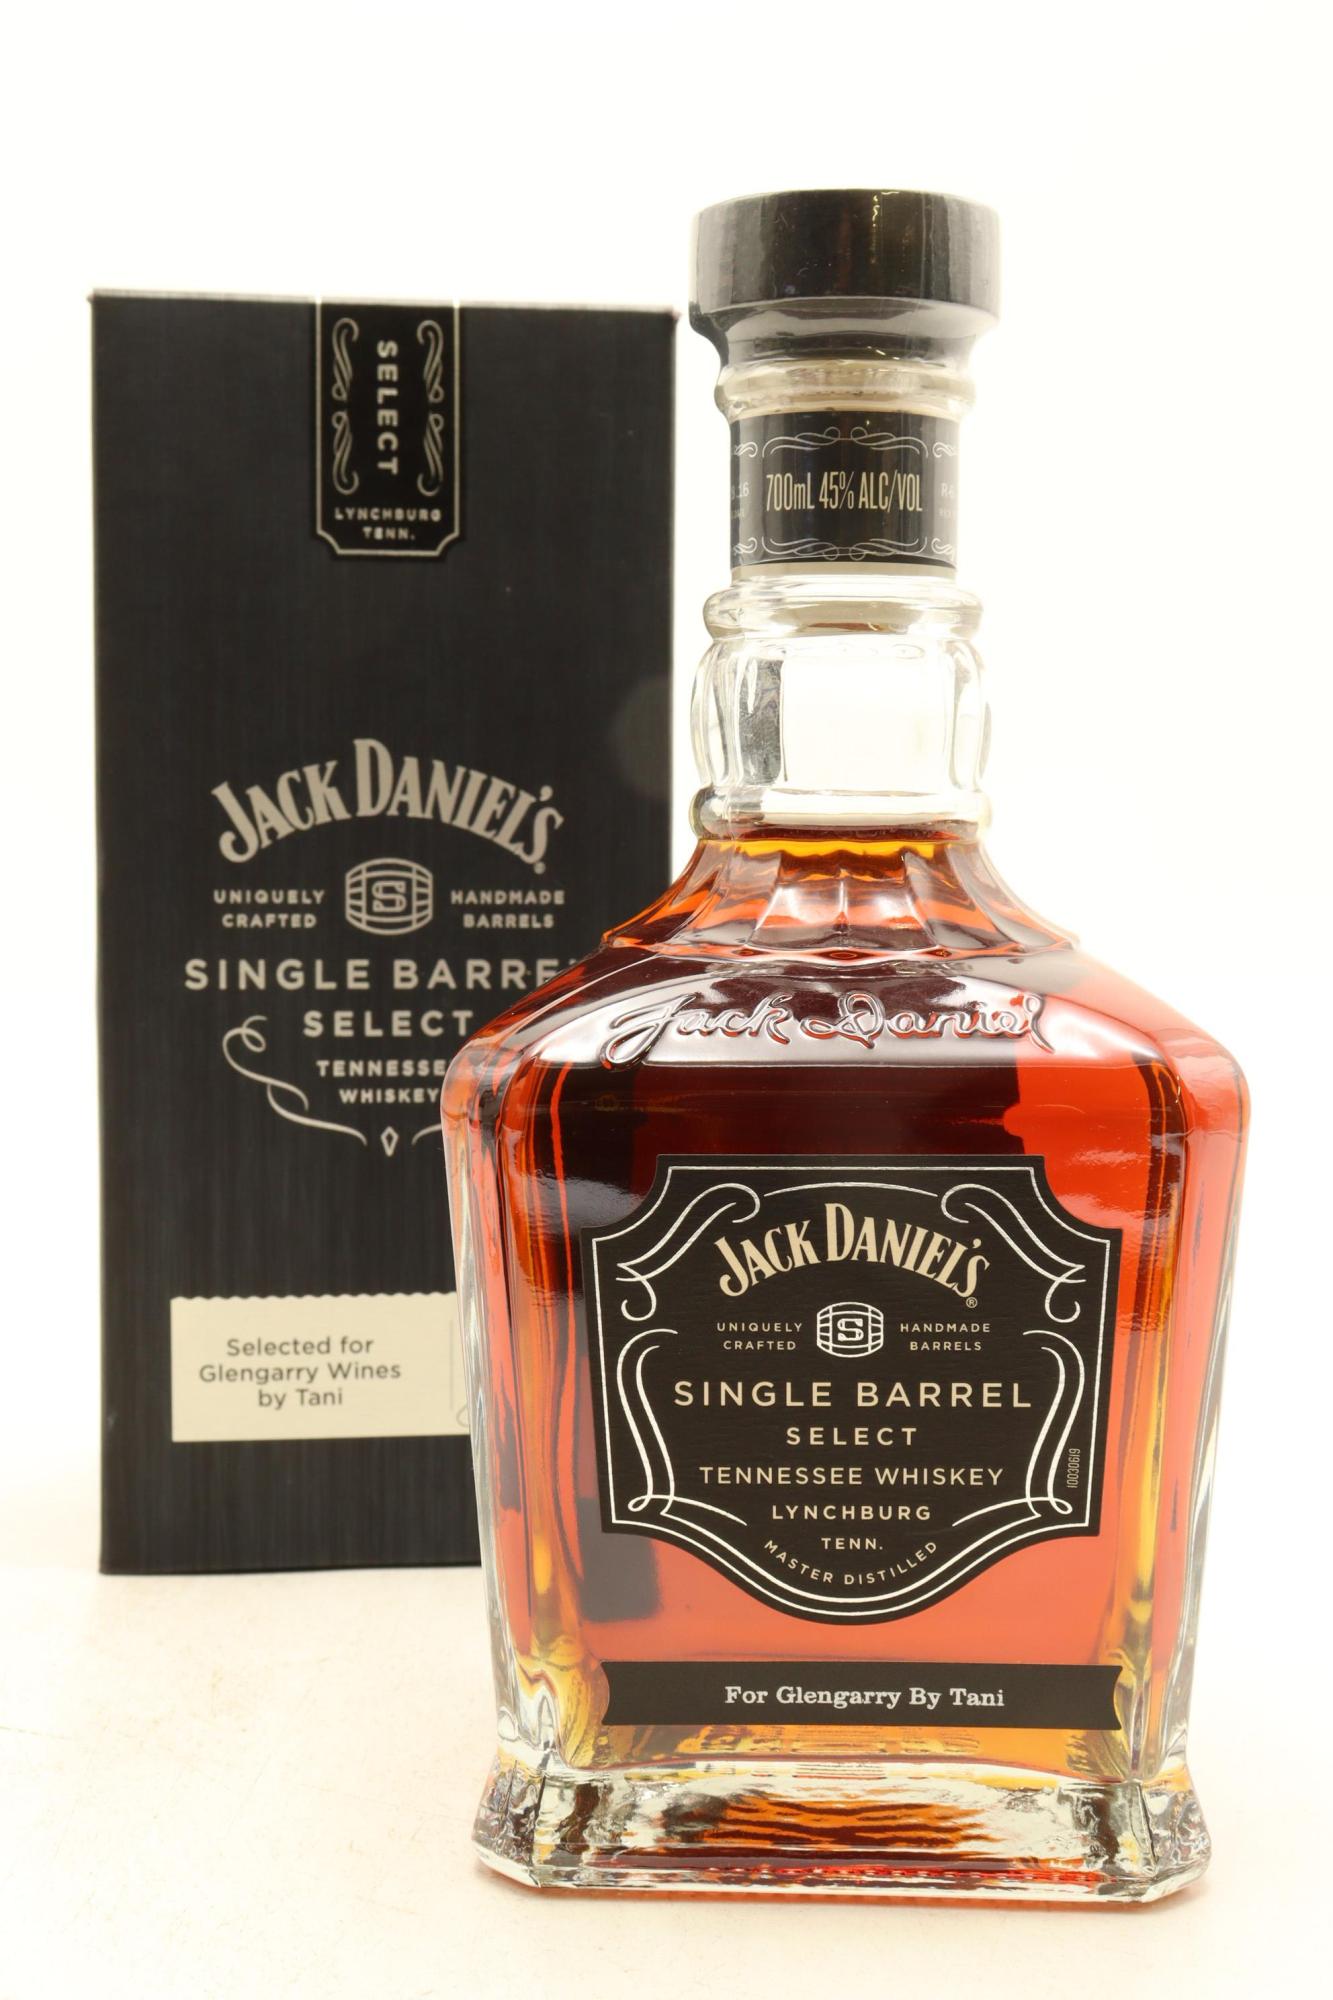 1) Jack Daniel's 'Single Barrel' Select Tennessee Whiskey, 45% ABV